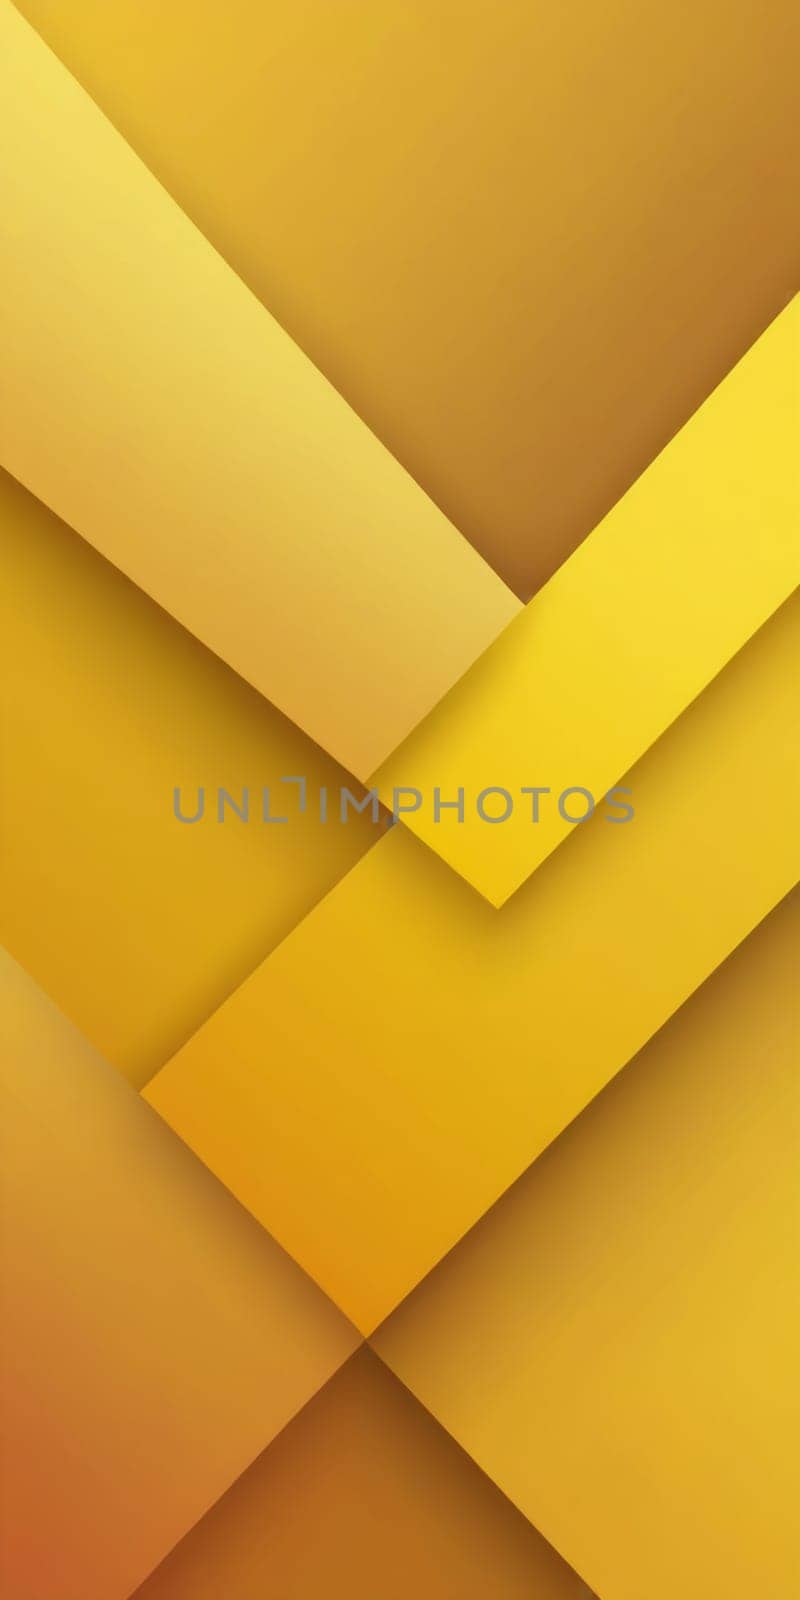 Trapezoidal Shapes in Yellow Khaki by nkotlyar